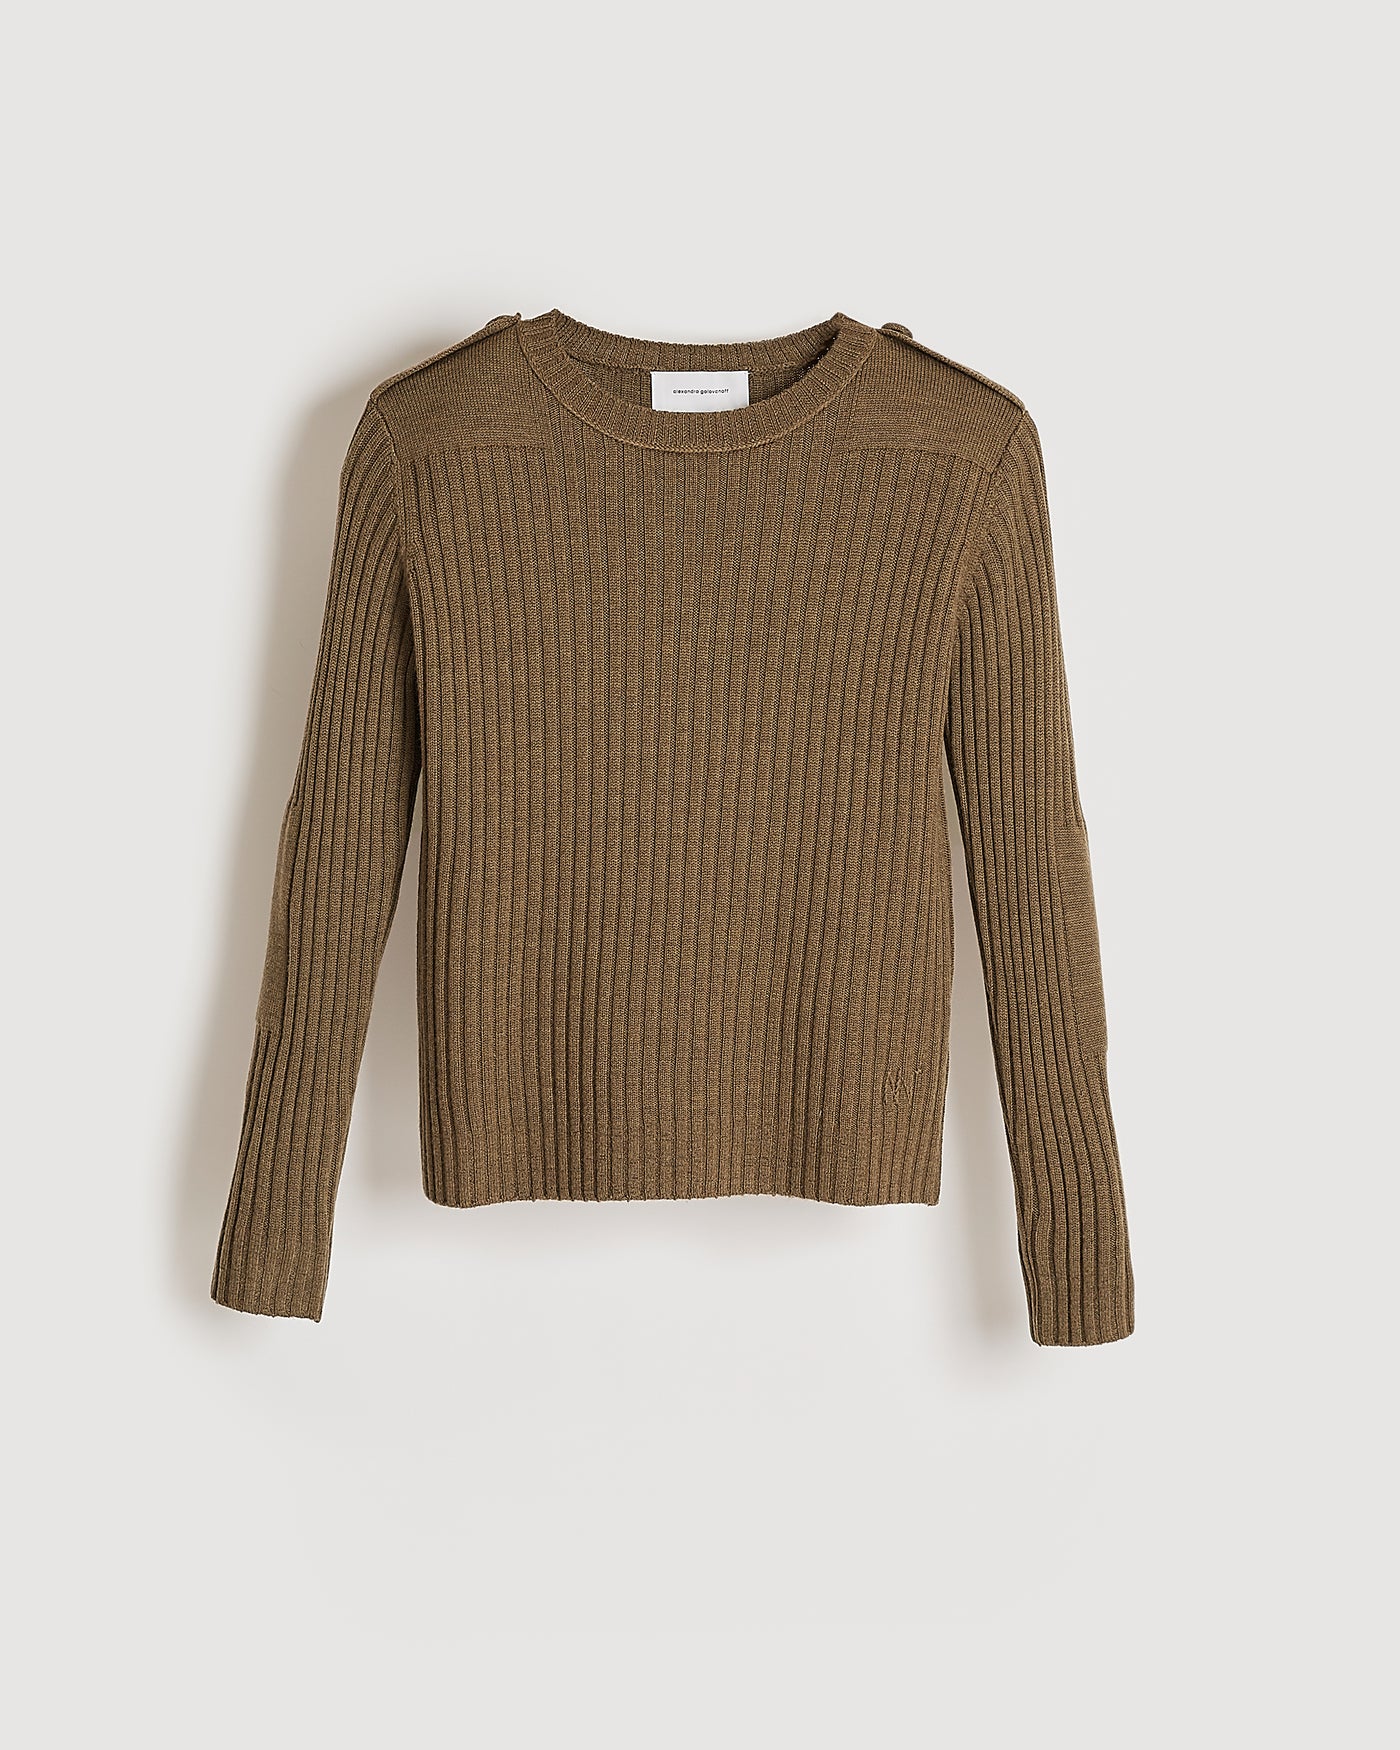 Pull sweater jumper 100% laine vierge virgin wool